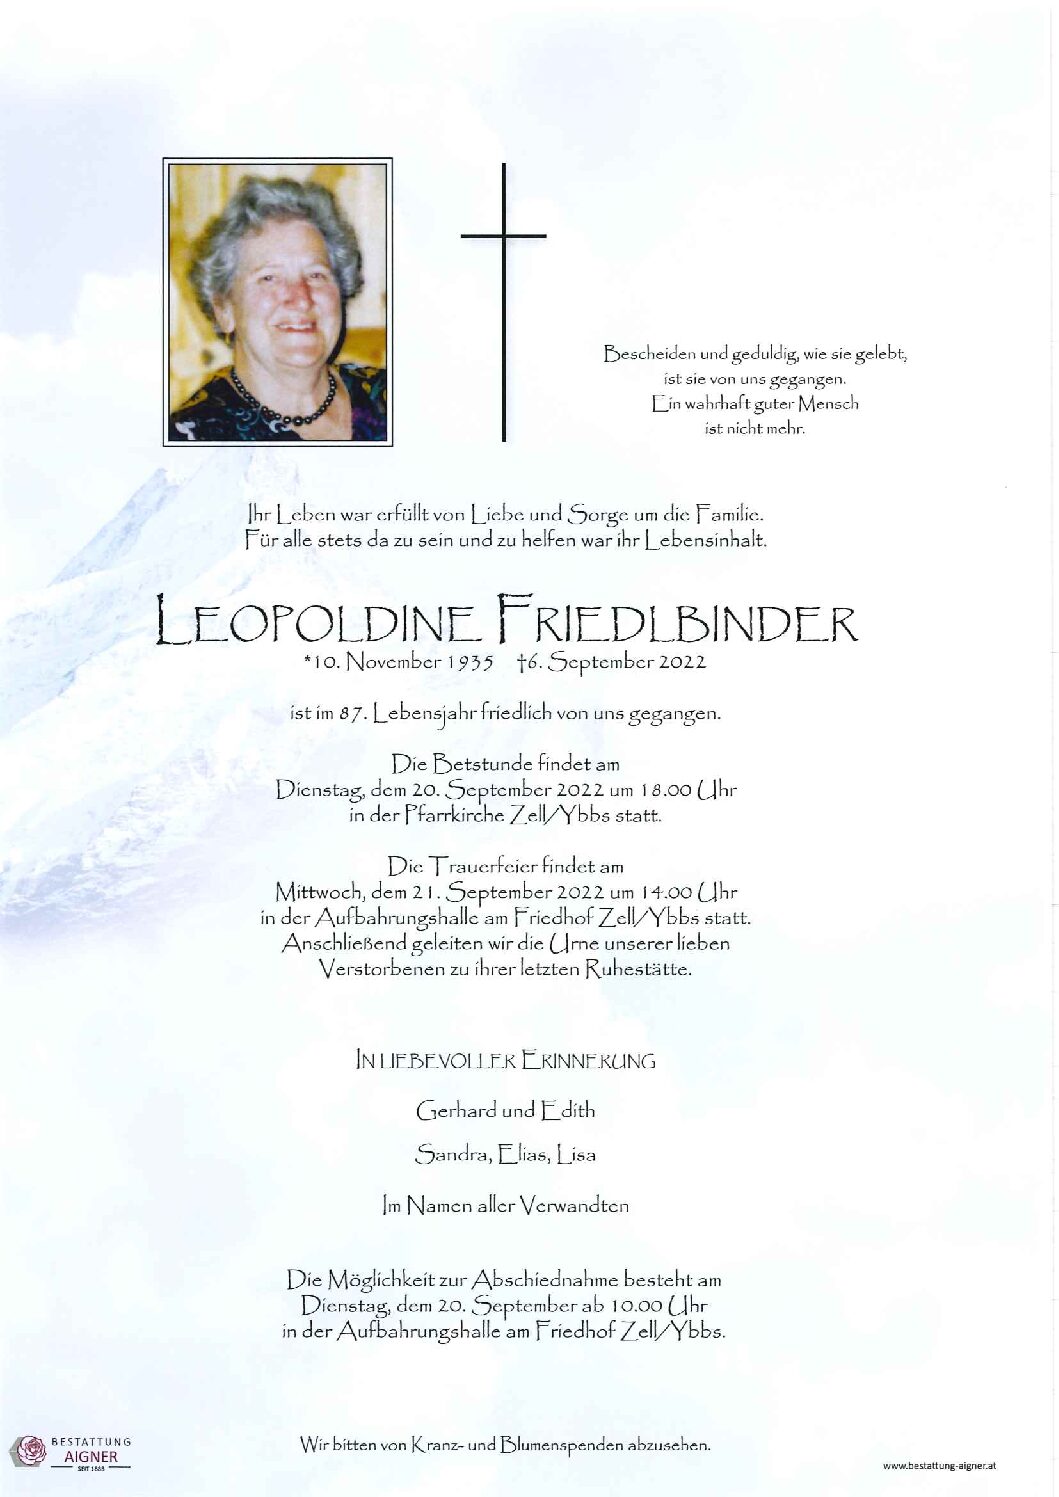 Leopoldine Friedlbinder